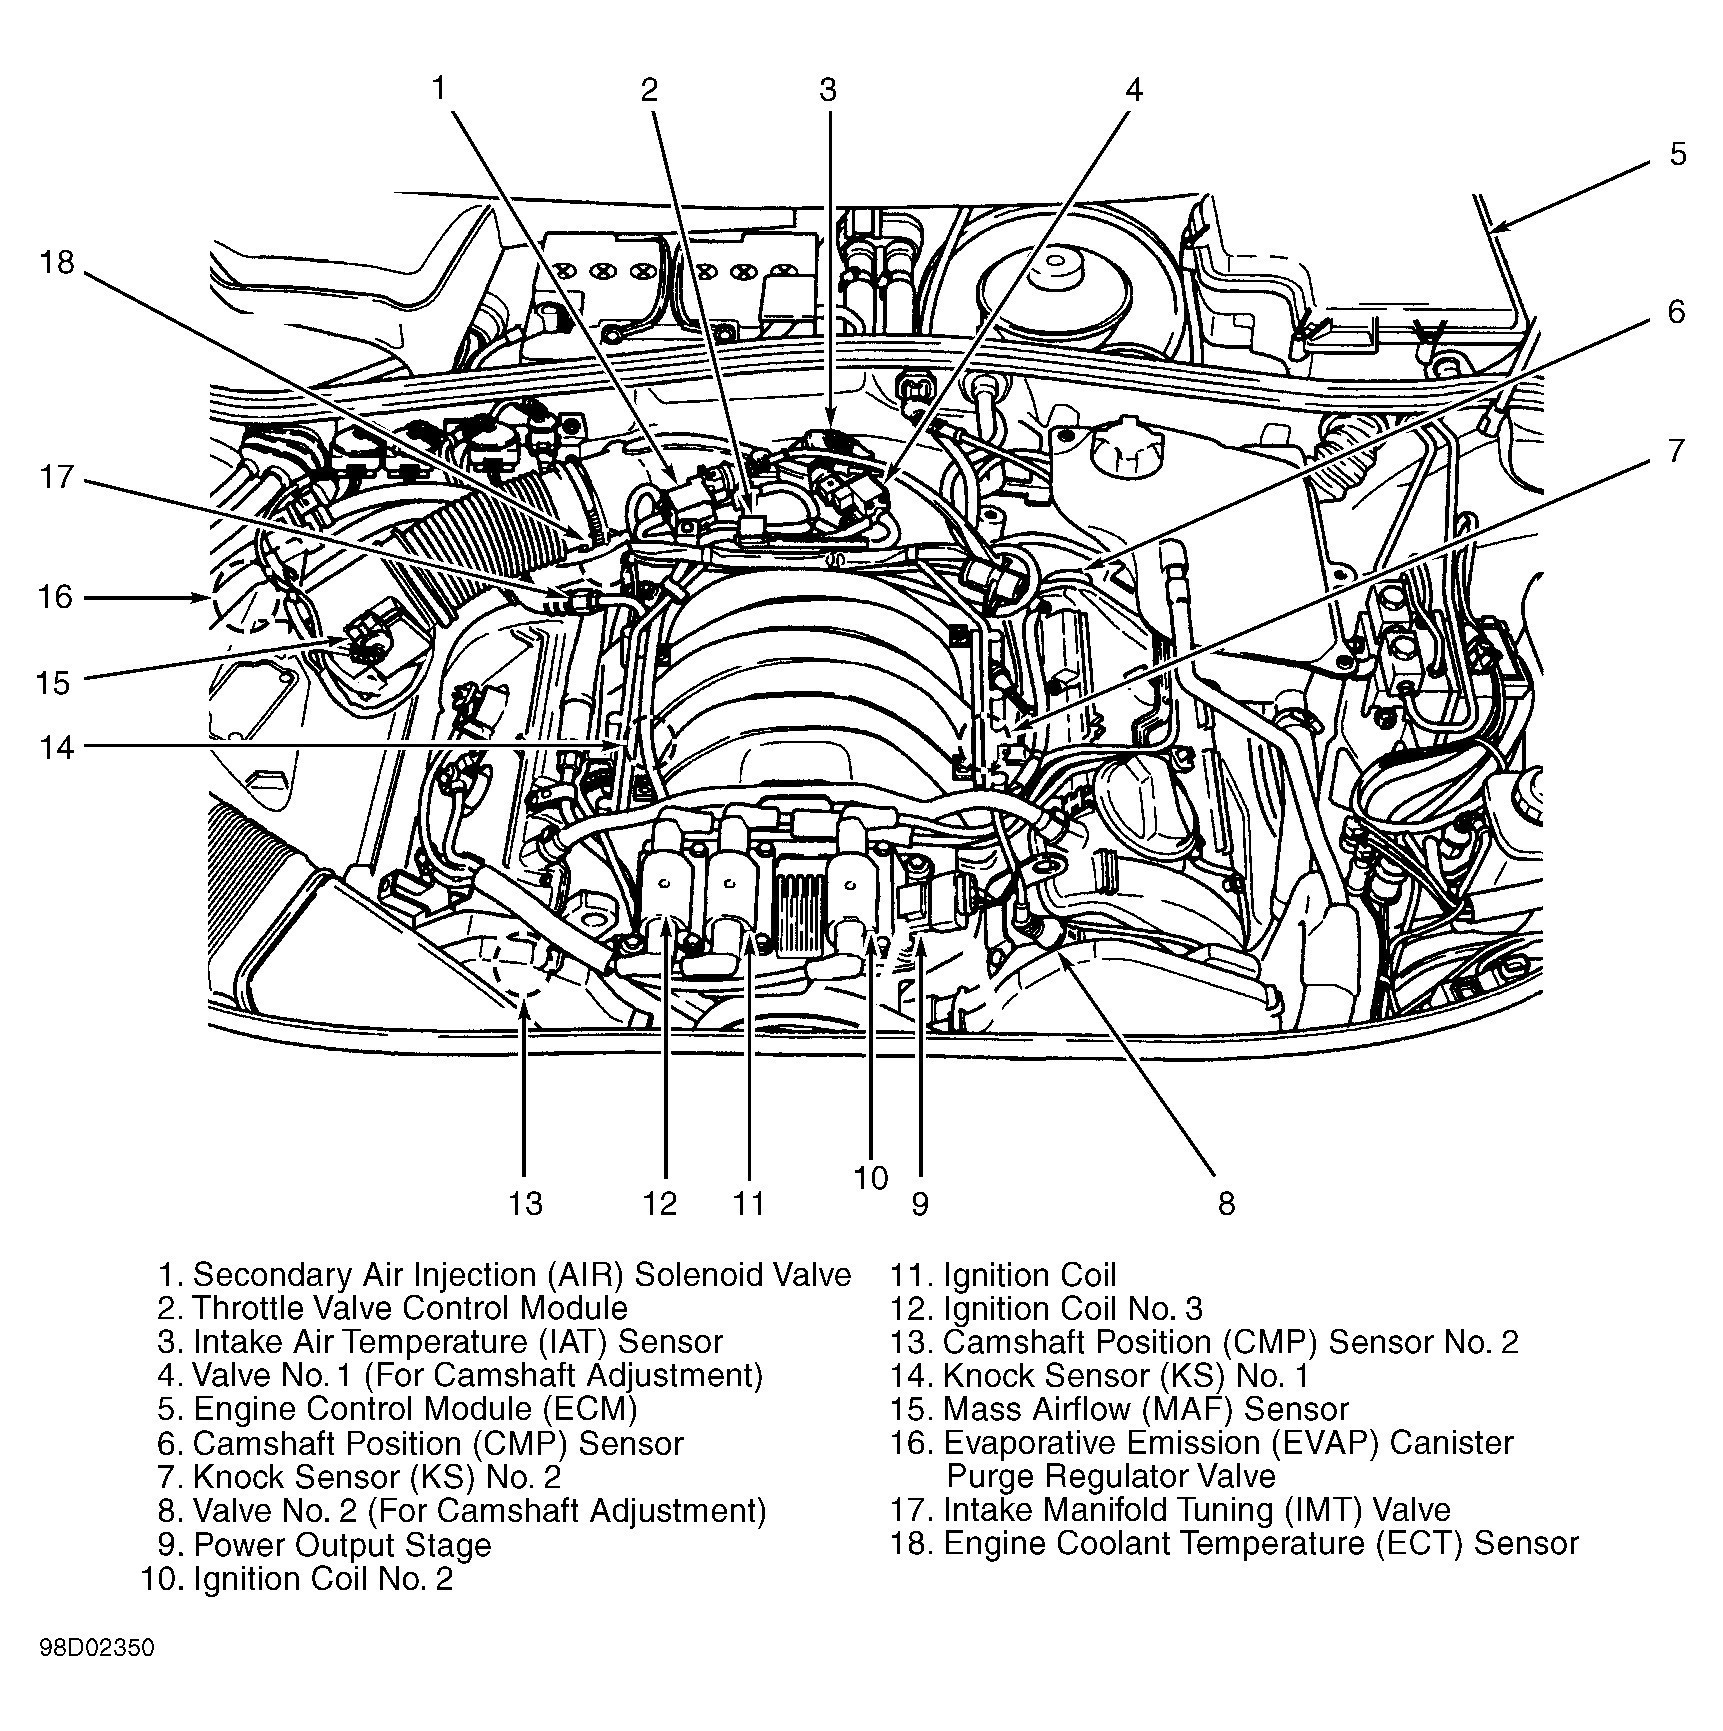 Ford Contour Engine Diagram 2000 ford Contour Transmission Diagram Simple Guide About Of Ford Contour Engine Diagram